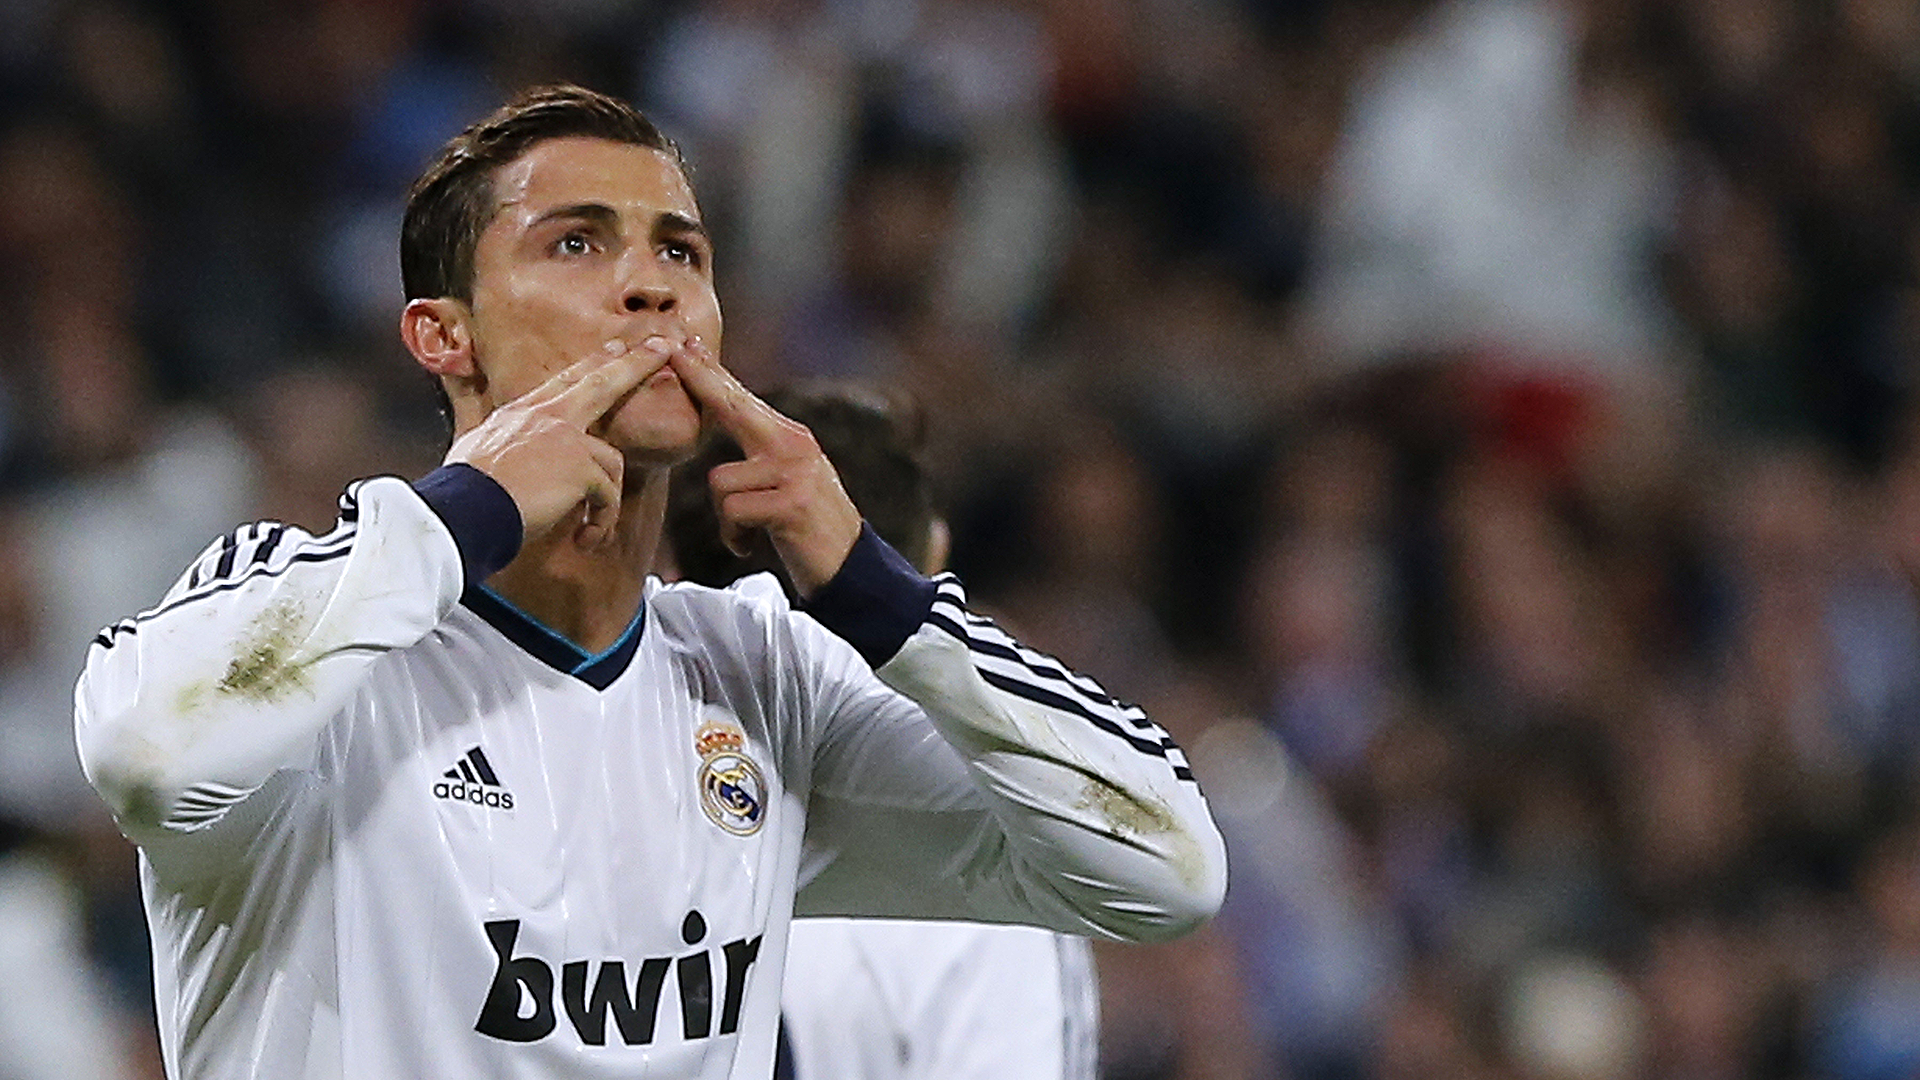 Unirse explique Embotellamiento Cuántos goles lleva Cristiano Ronaldo? | Goal.com Espana